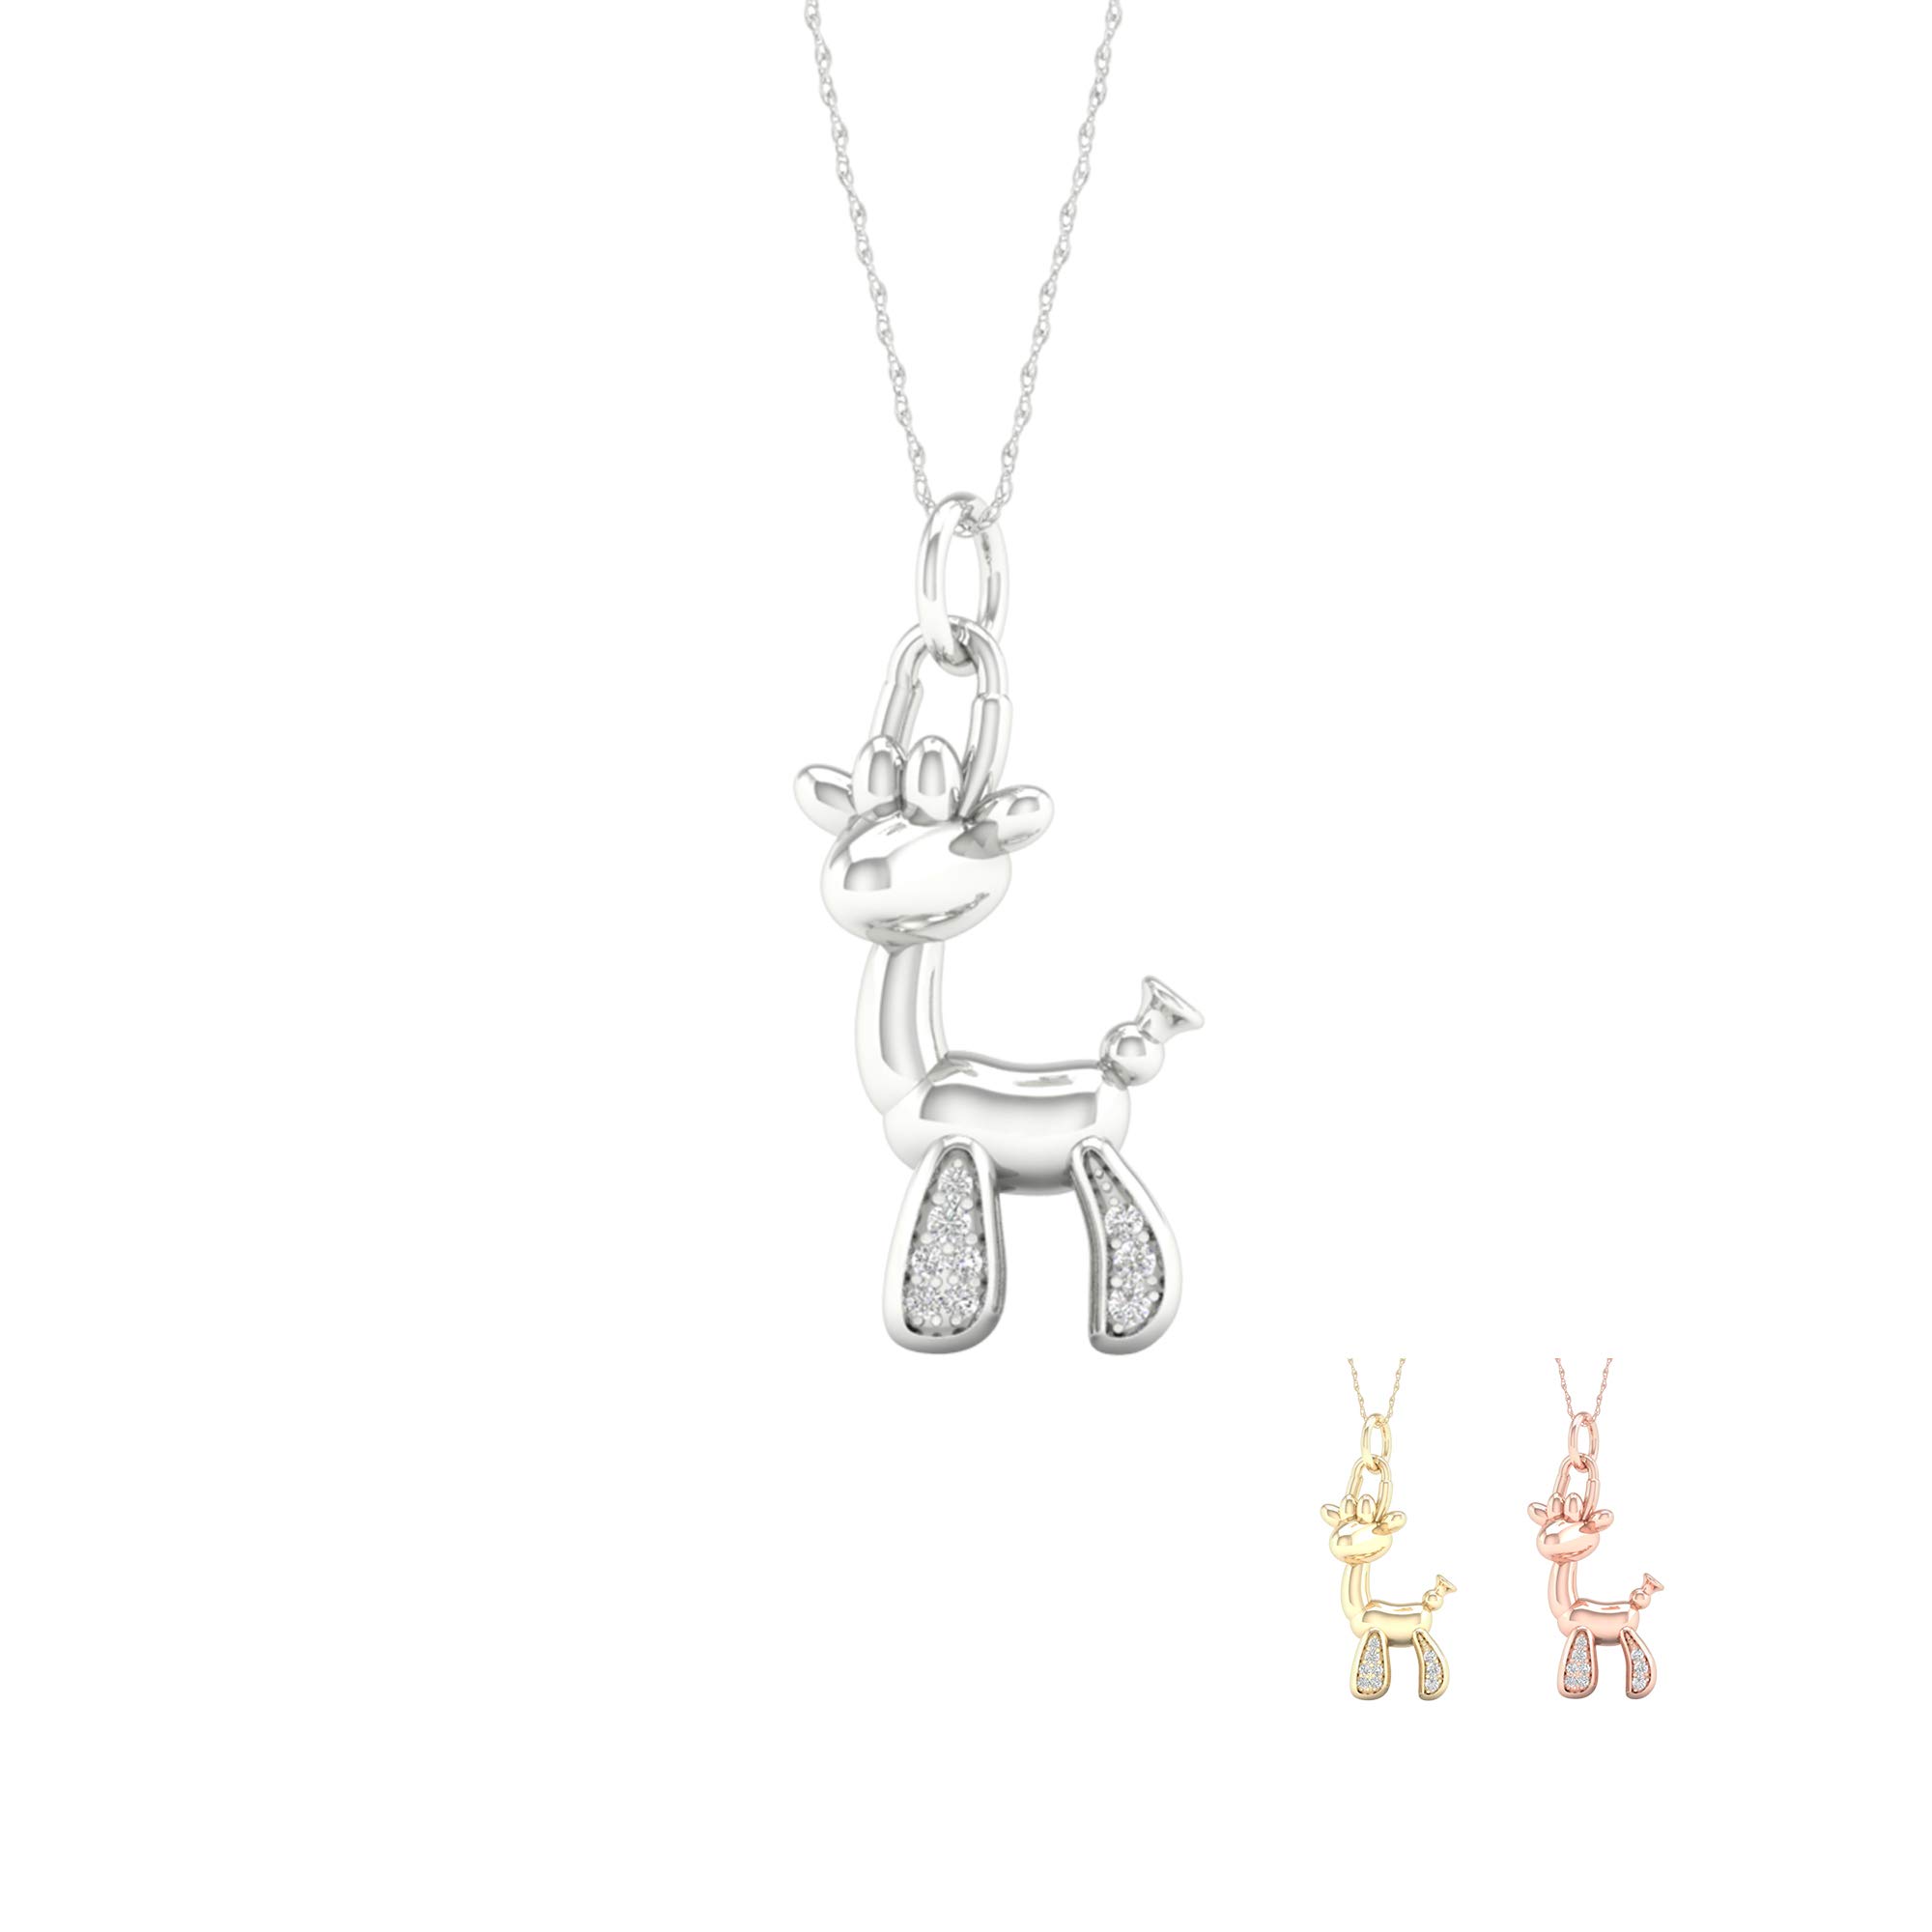 DZON 1/20ct Diamond Animal Charm Necklace in Sterling Silver - Giraffe